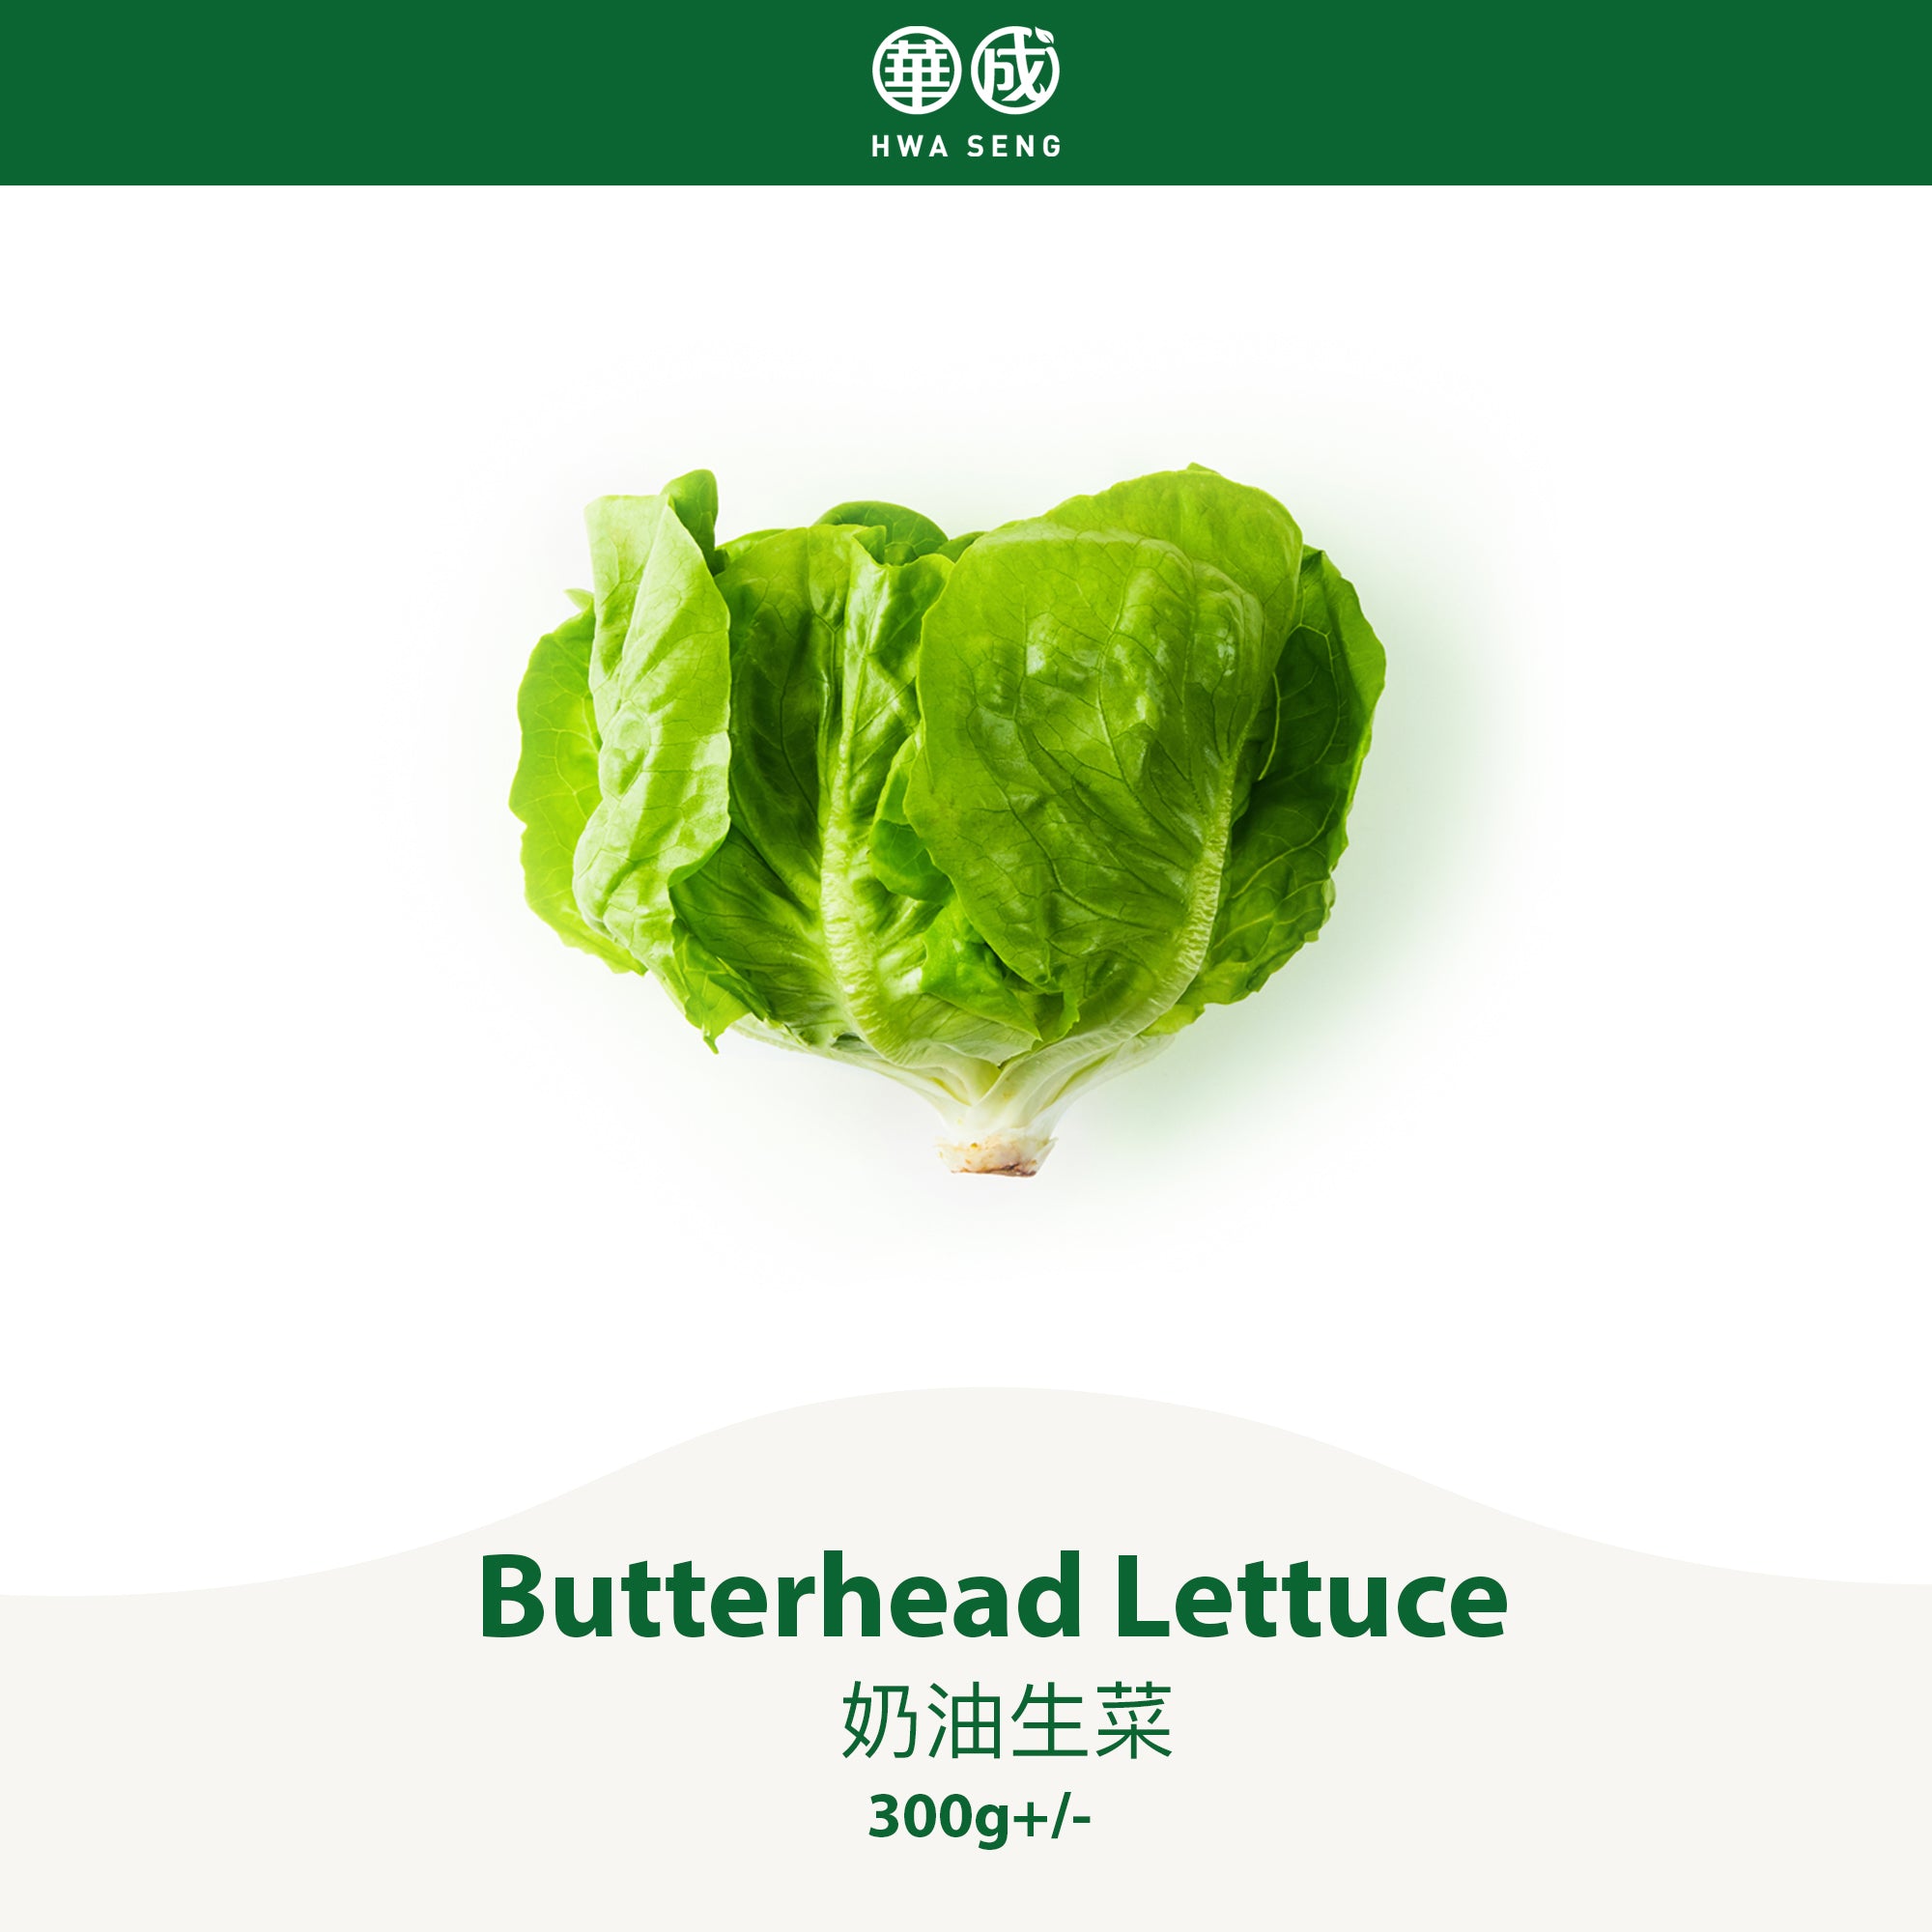 Butterhead Lettuce 奶油生菜 300g+/-